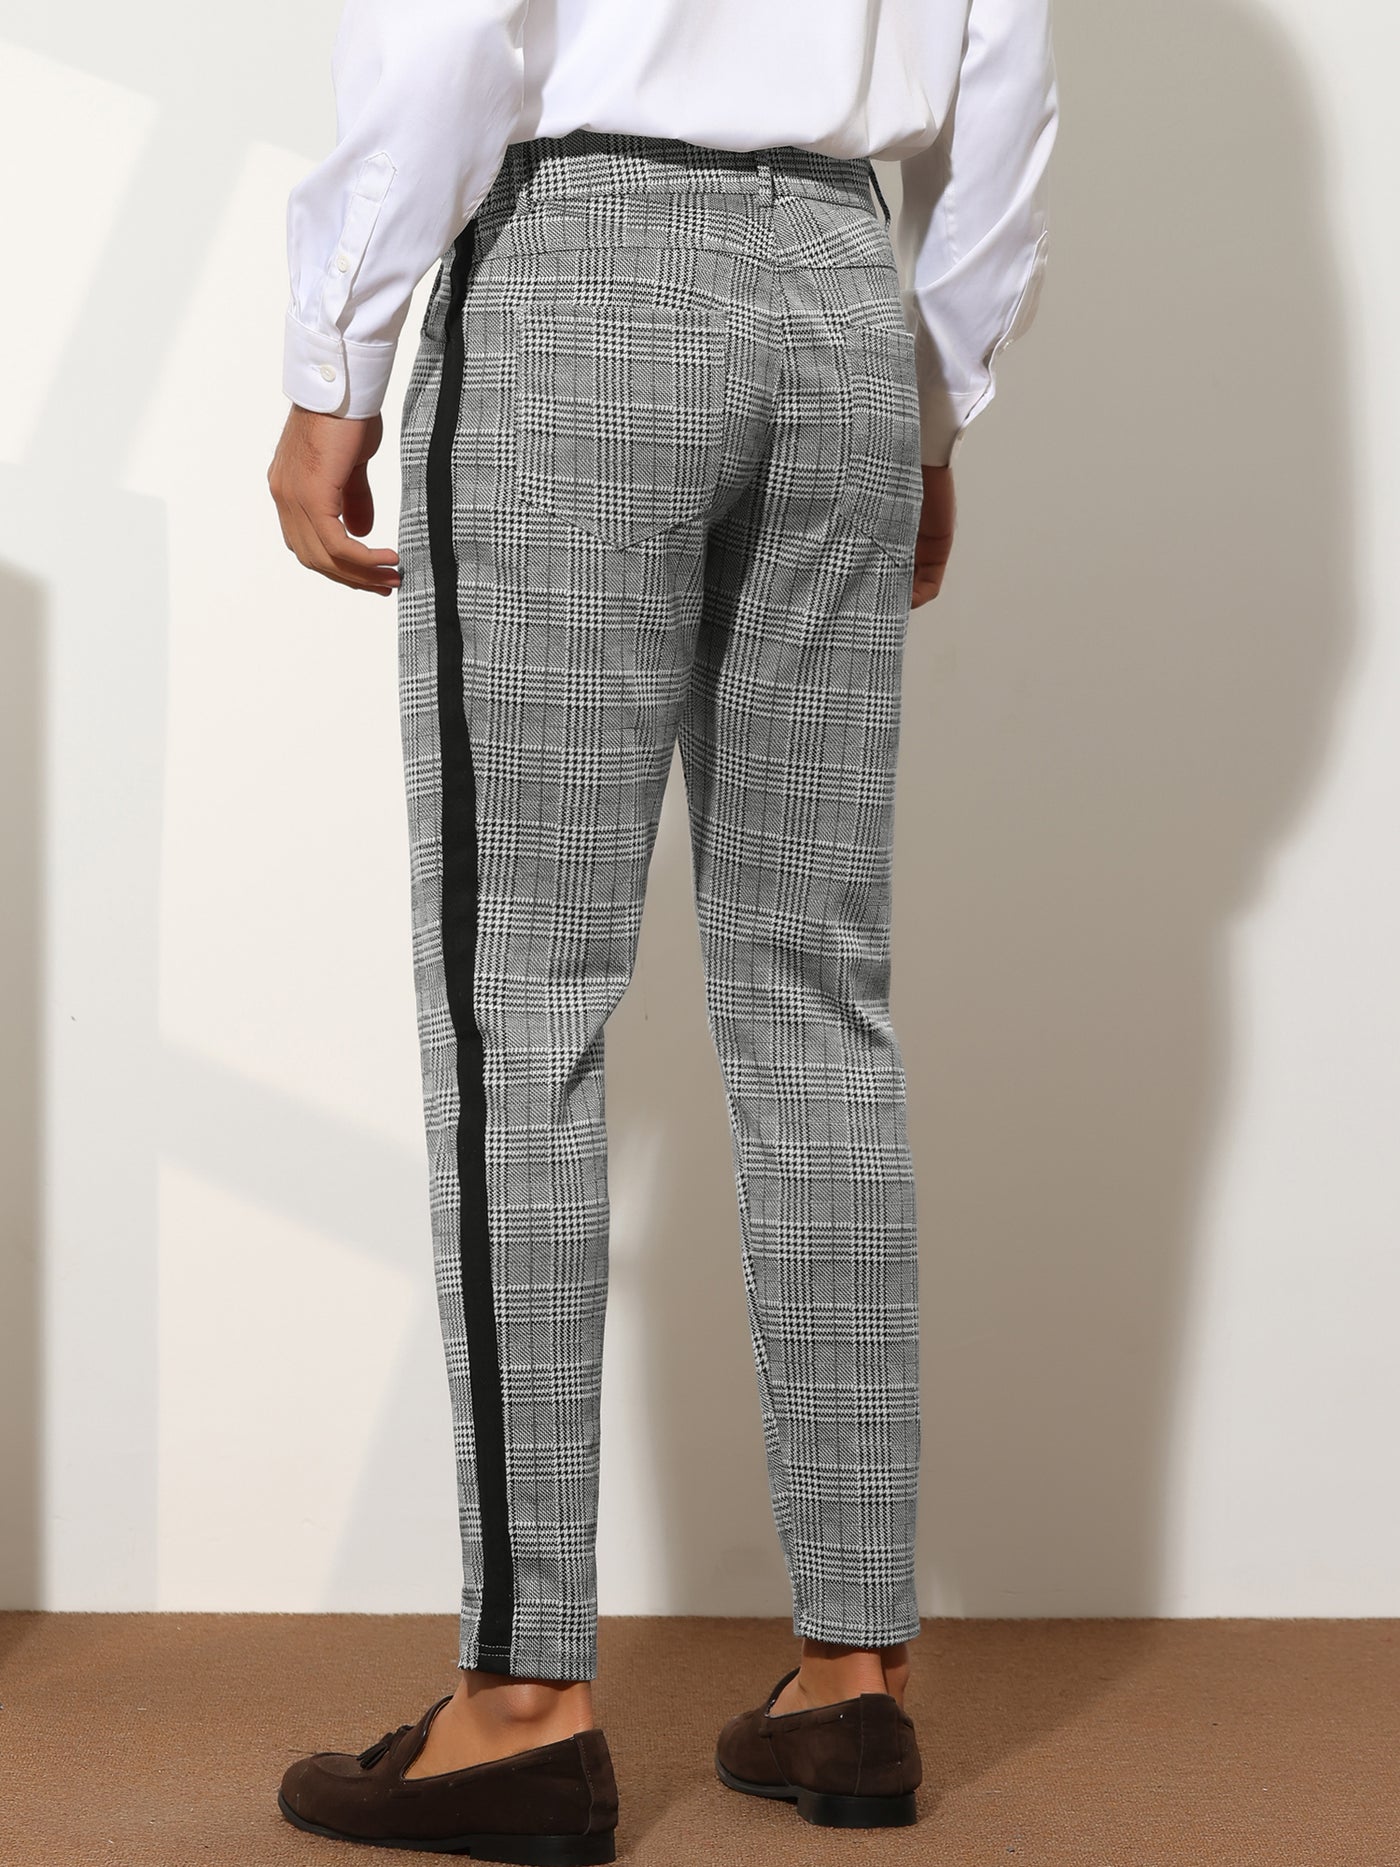 Bublédon Plaid Pants for Men's Slim Fit Button Closure Flat Front Checked Trousers